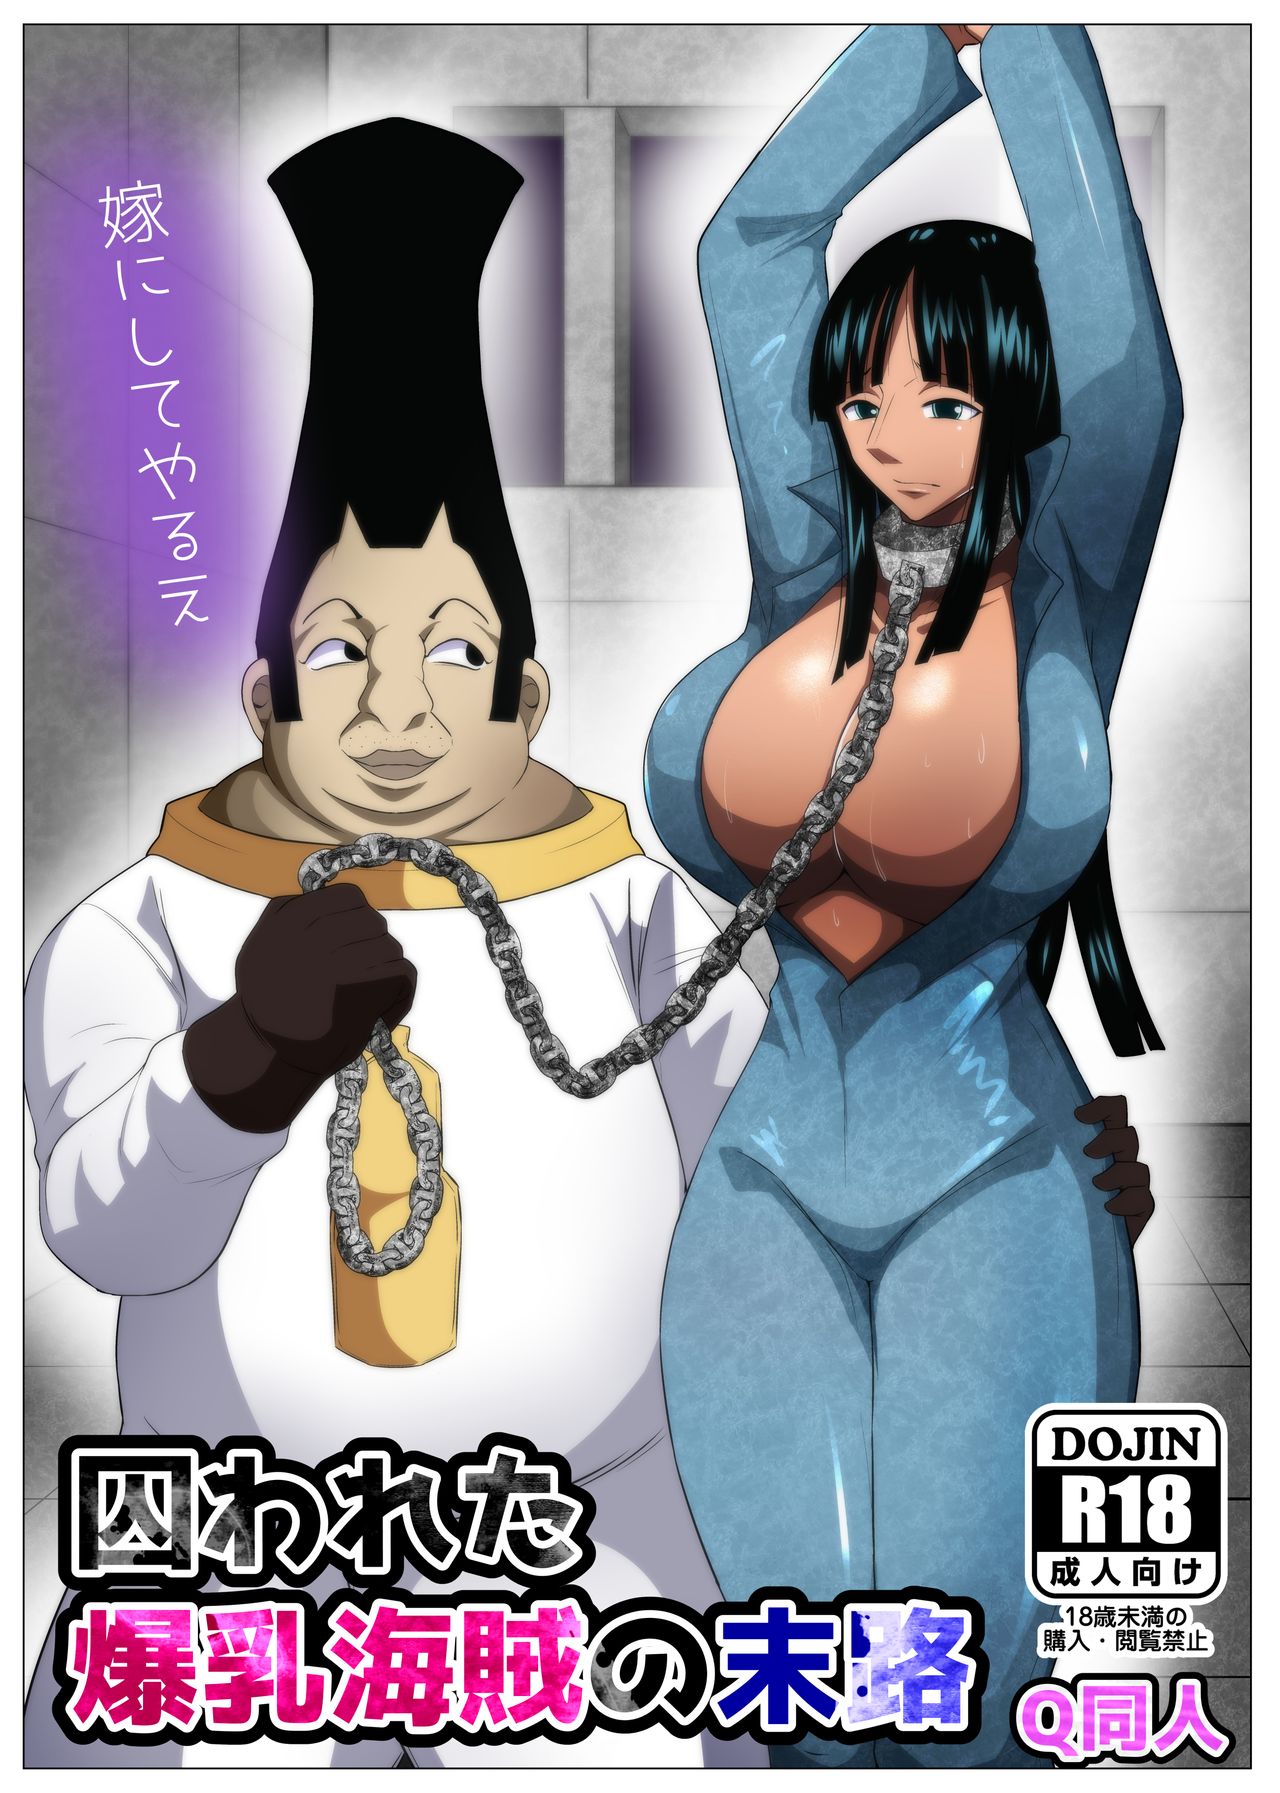 Big Breast Doujinshi - The Fate Of The Captured Big Breasted Pirate - Q Doujin - KingComiX.com